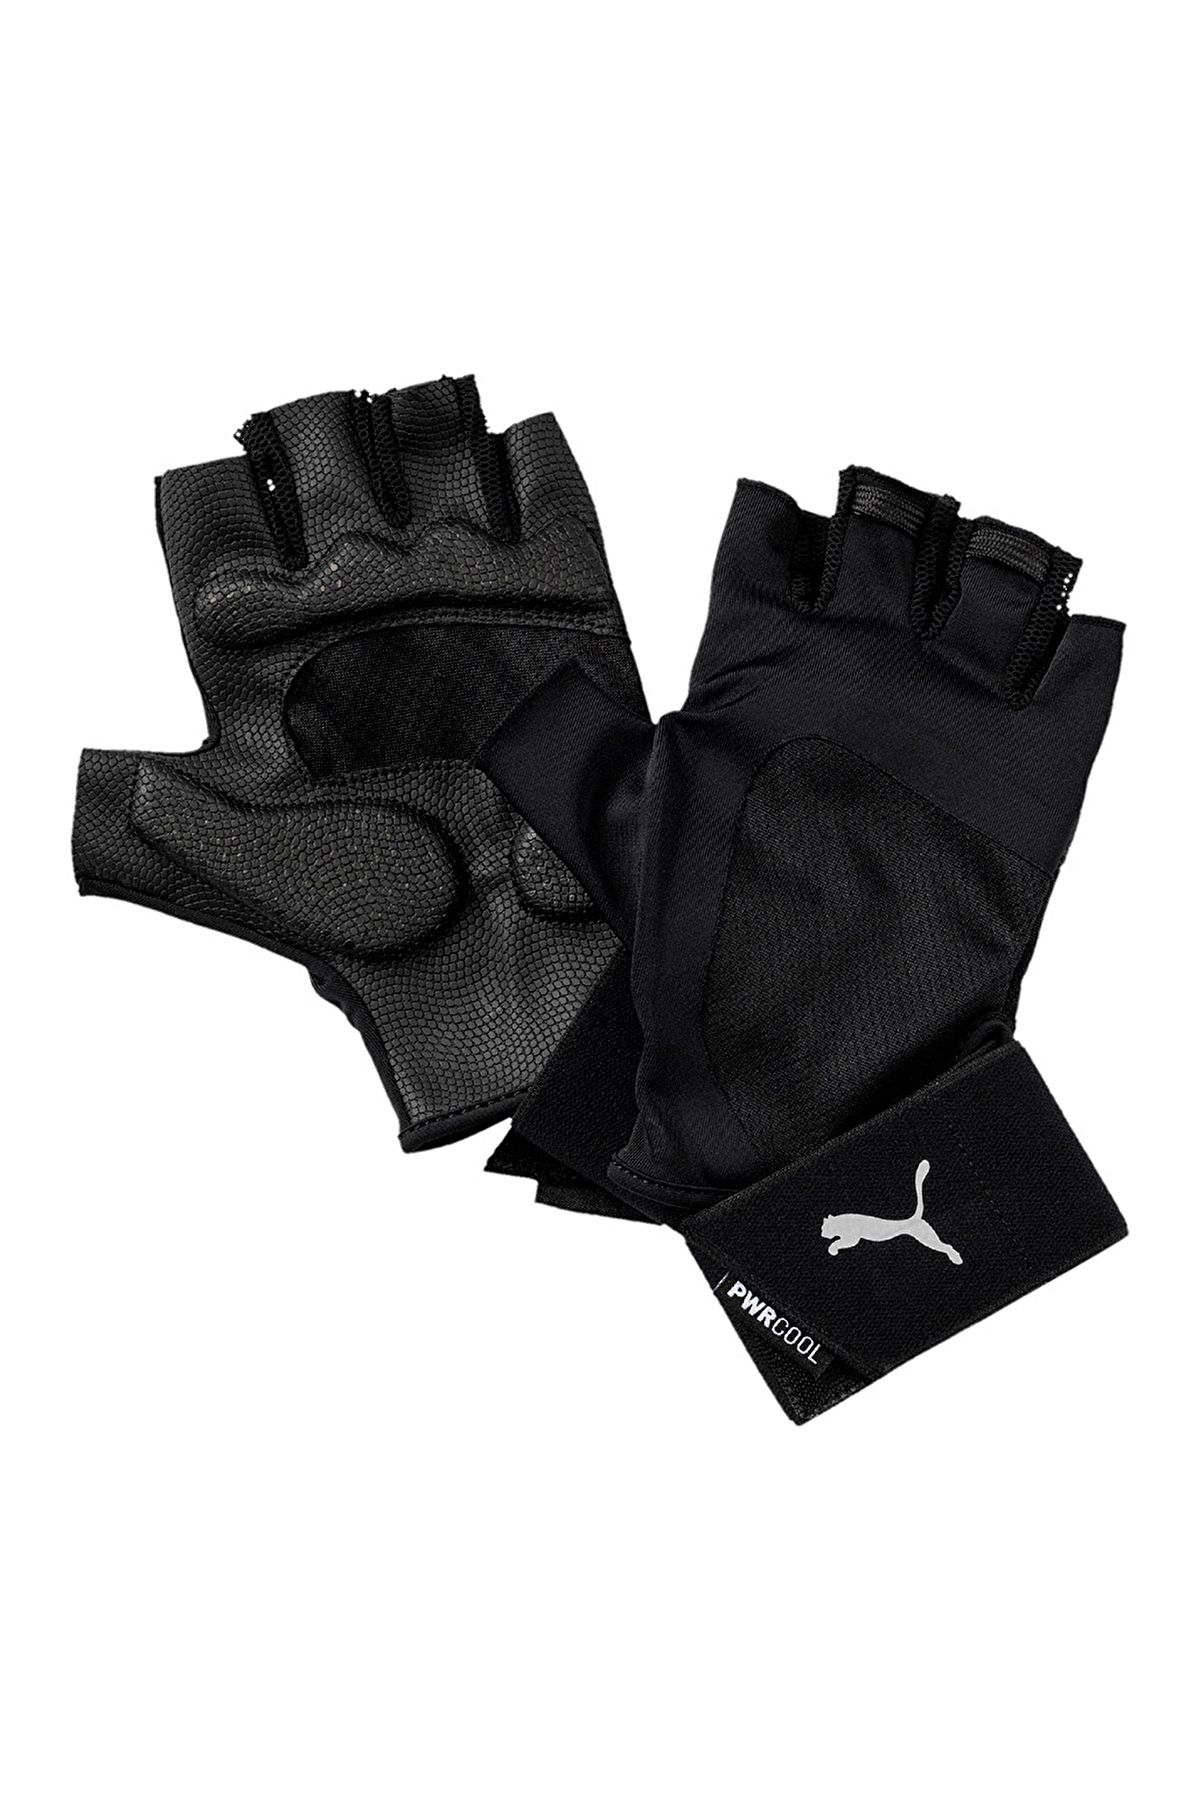 Puma Tr Ess Gloves Premium Fitness Ağırlık Eldiveni Siyah